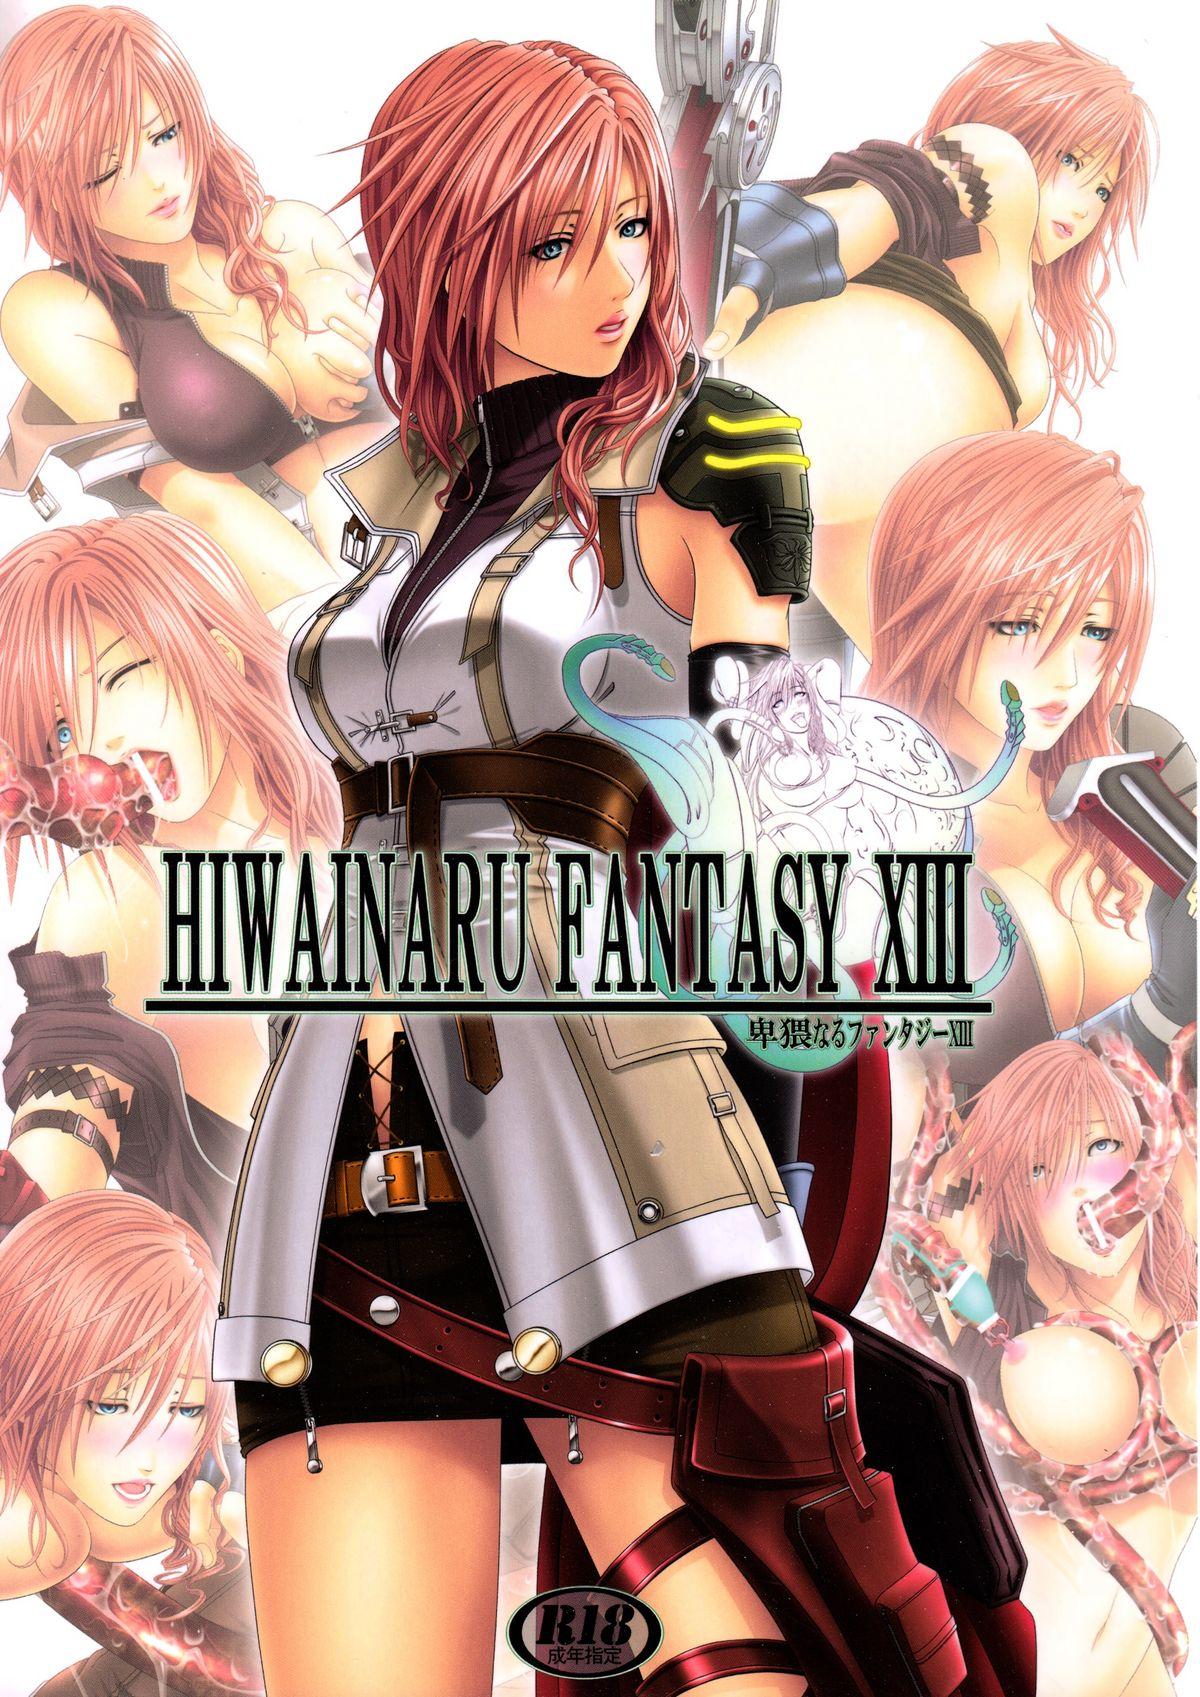 Tanned HIWAINARU FANTASY XIII - Final fantasy xiii Handjob - Picture 1